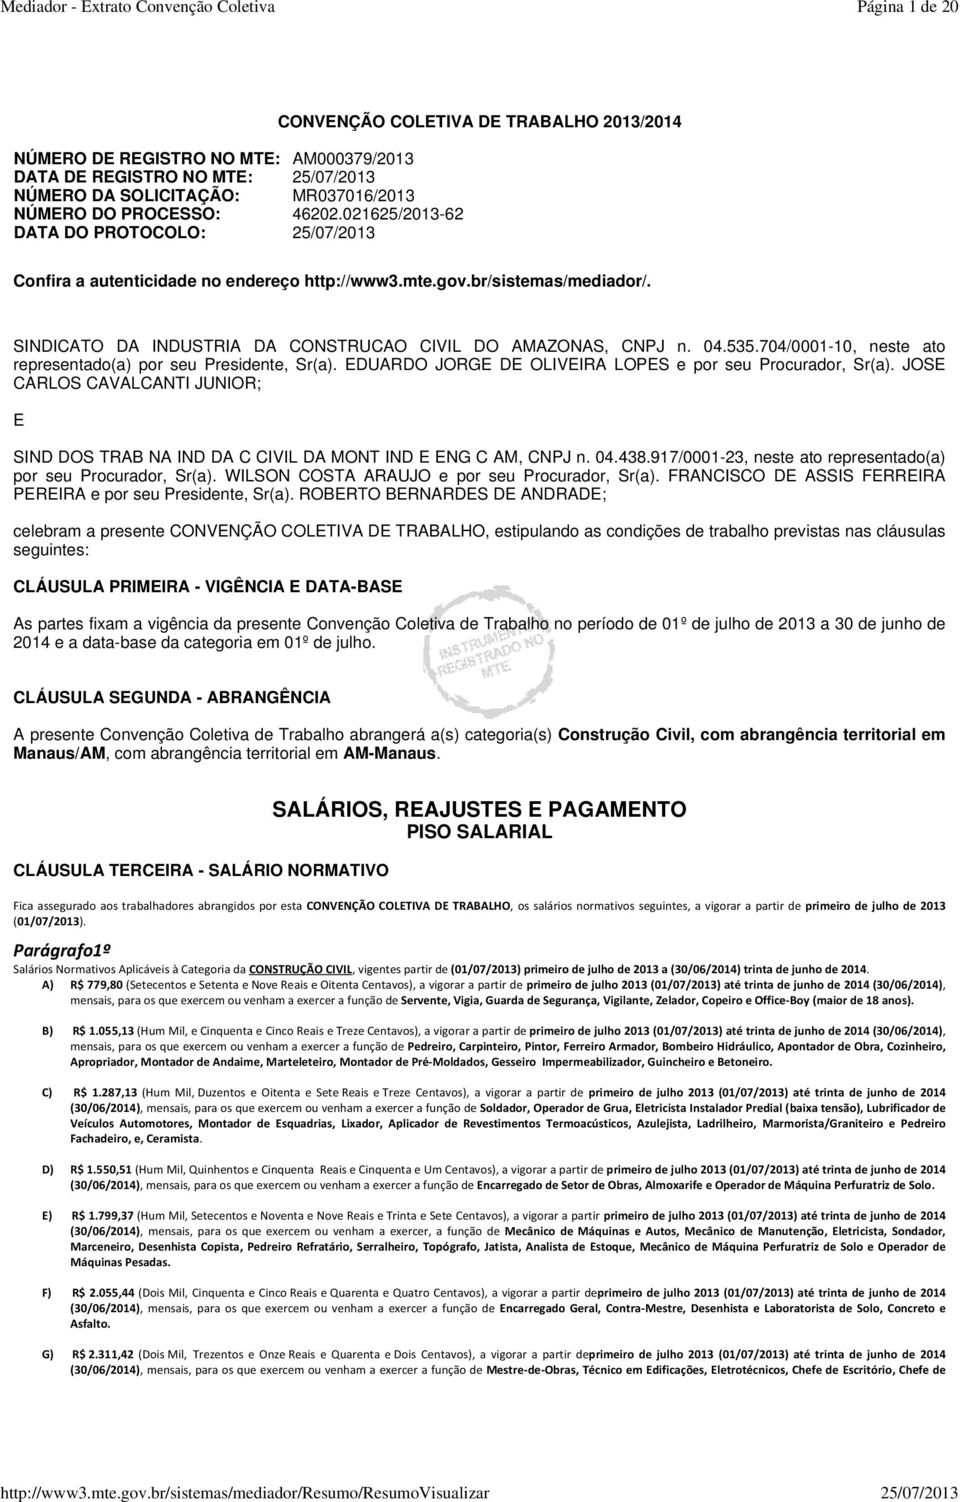 SINDICATO DA INDUSTRIA DA CONSTRUCAO CIVIL DO AMAZONAS, CNPJ n. 04.535.704/0001-10, neste ato representado(a) por seu Presidente, Sr(a). EDUARDO JORGE DE OLIVEIRA LOPES e por seu Procurador, Sr(a).